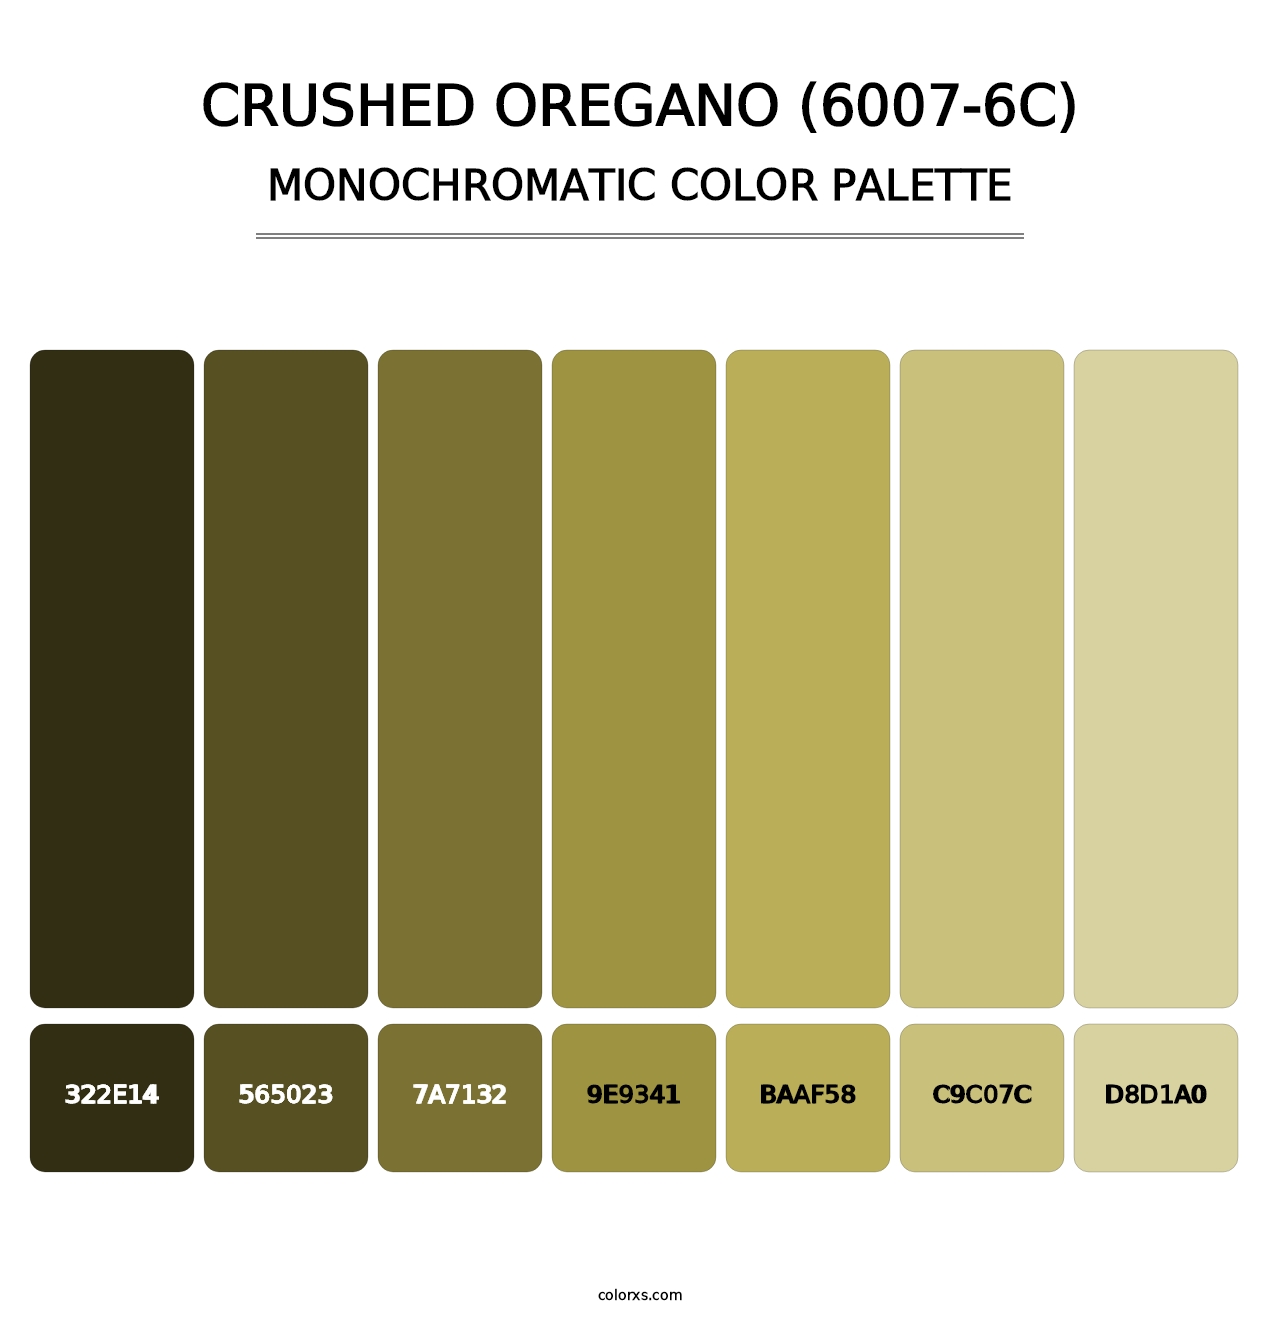 Crushed Oregano (6007-6C) - Monochromatic Color Palette